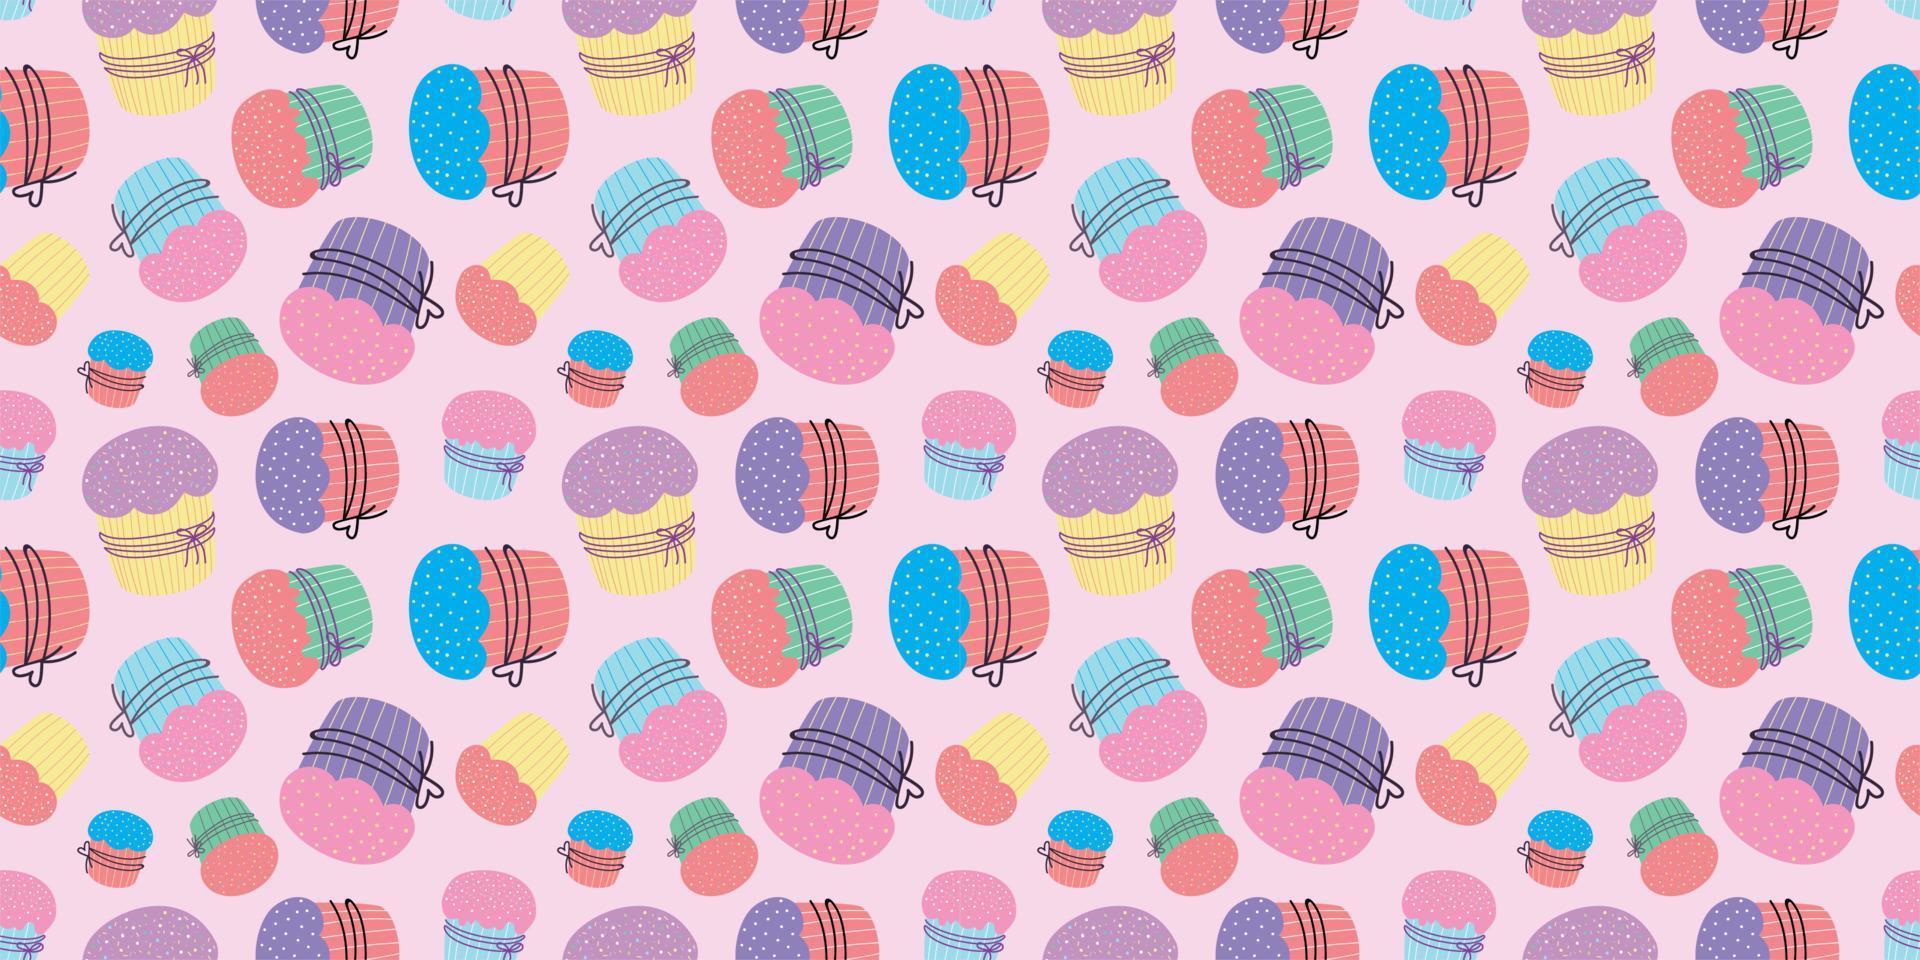 muffin sömlös mönster. påsk kaka bakgrund vektor